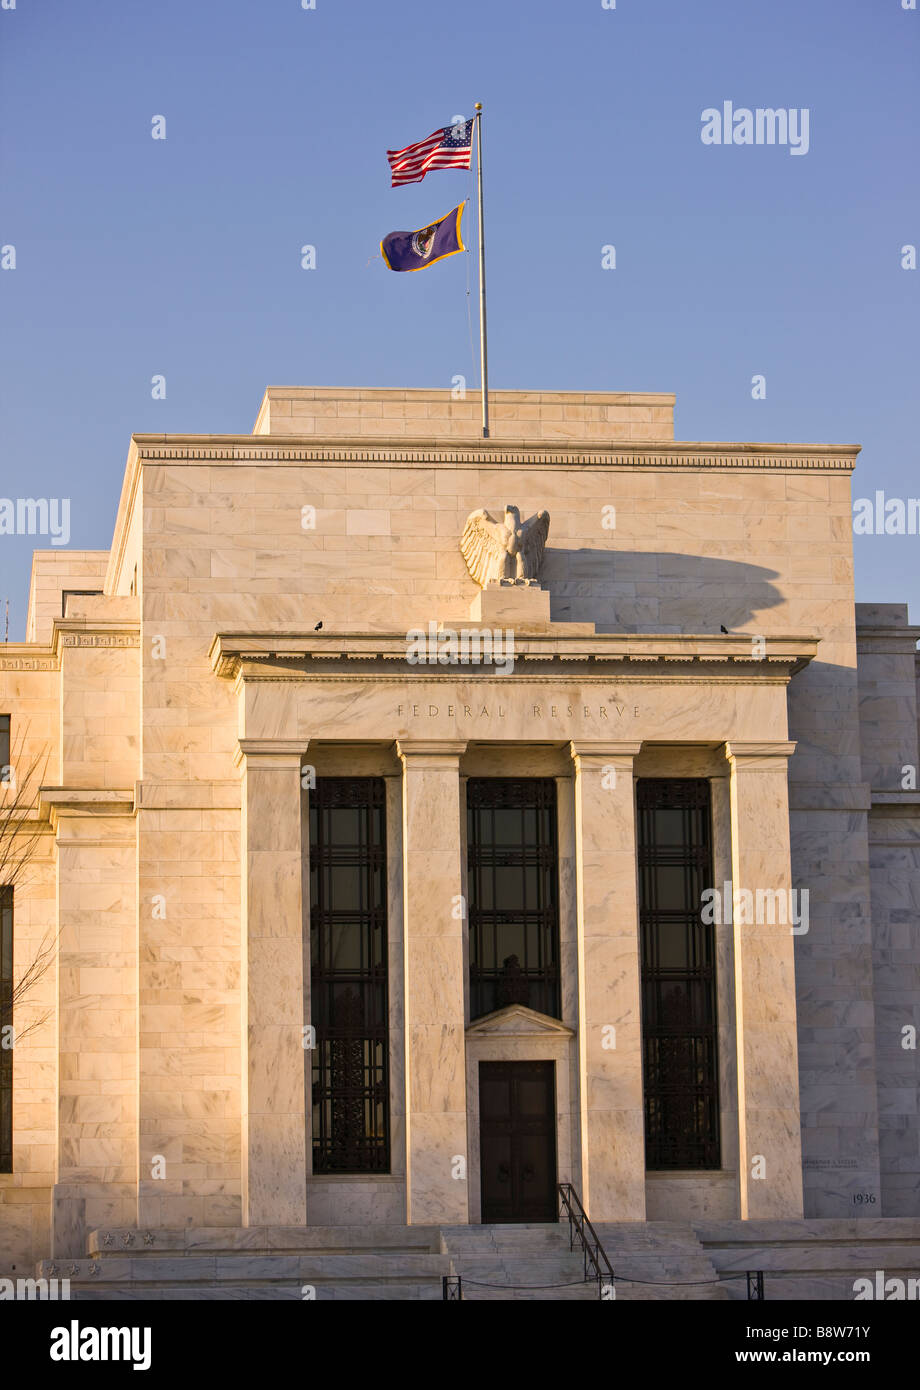 WASHINGTON DC USA United States Federal Reserve Bank building Stock Photo